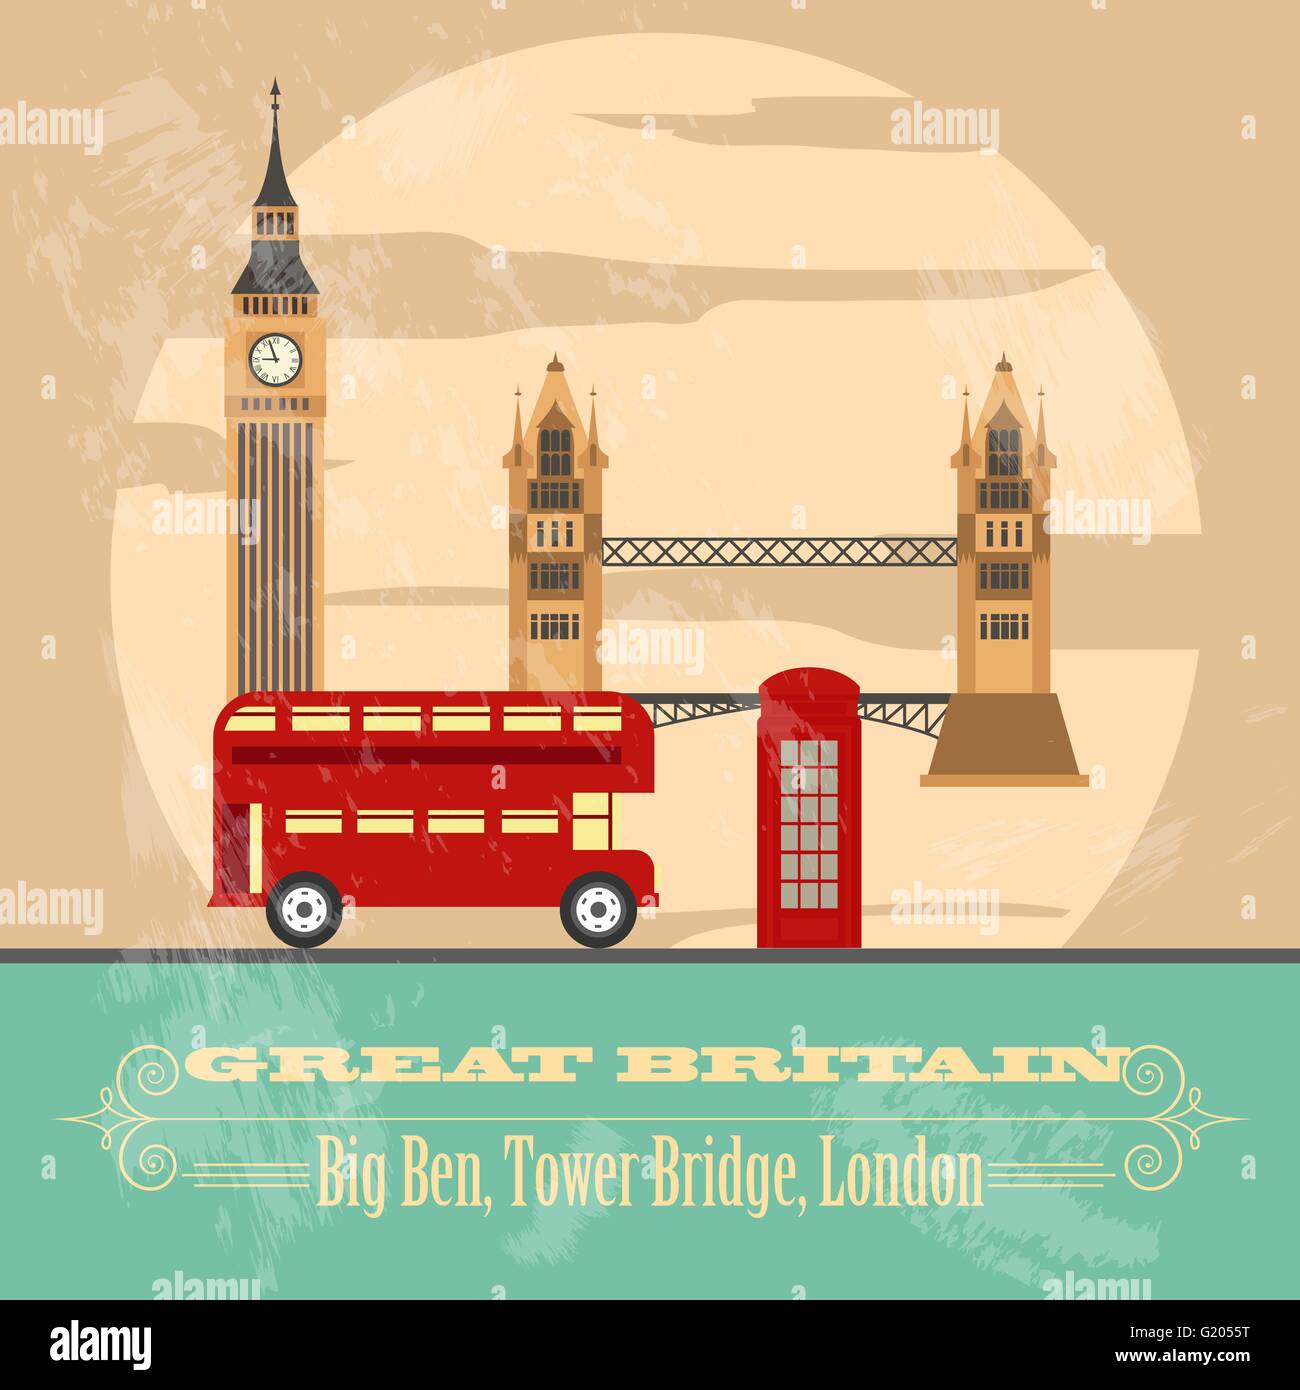 United Kingdom of Great Britain landmarks. Retro styled image. Vector illustration Stock Vector